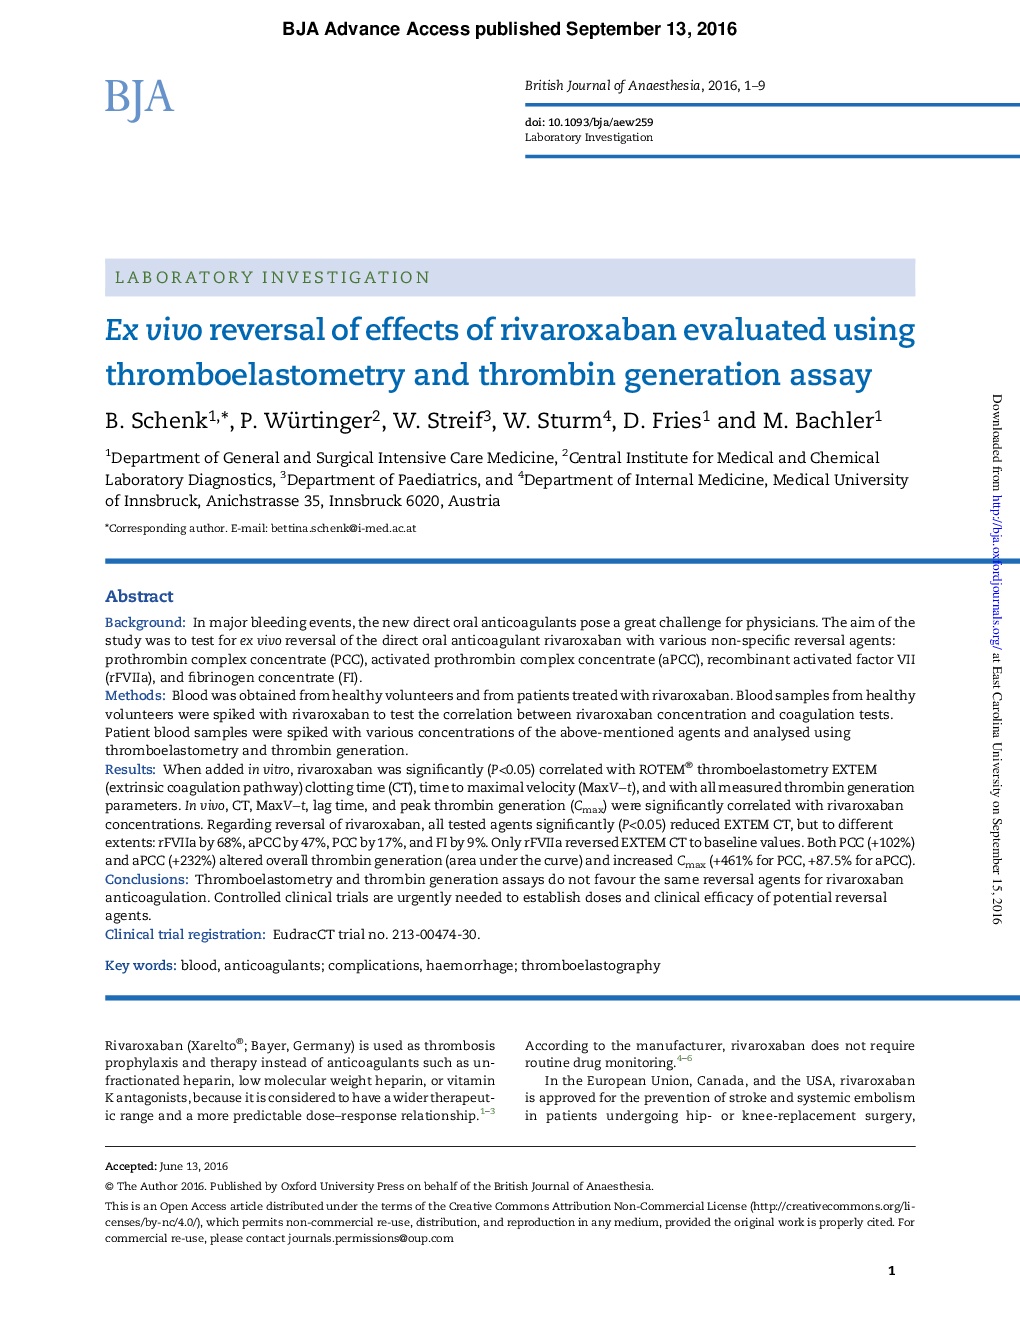 Ex vivo reversal of effects of rivaroxaban evaluated using thromboelastometry and thrombin generation assay